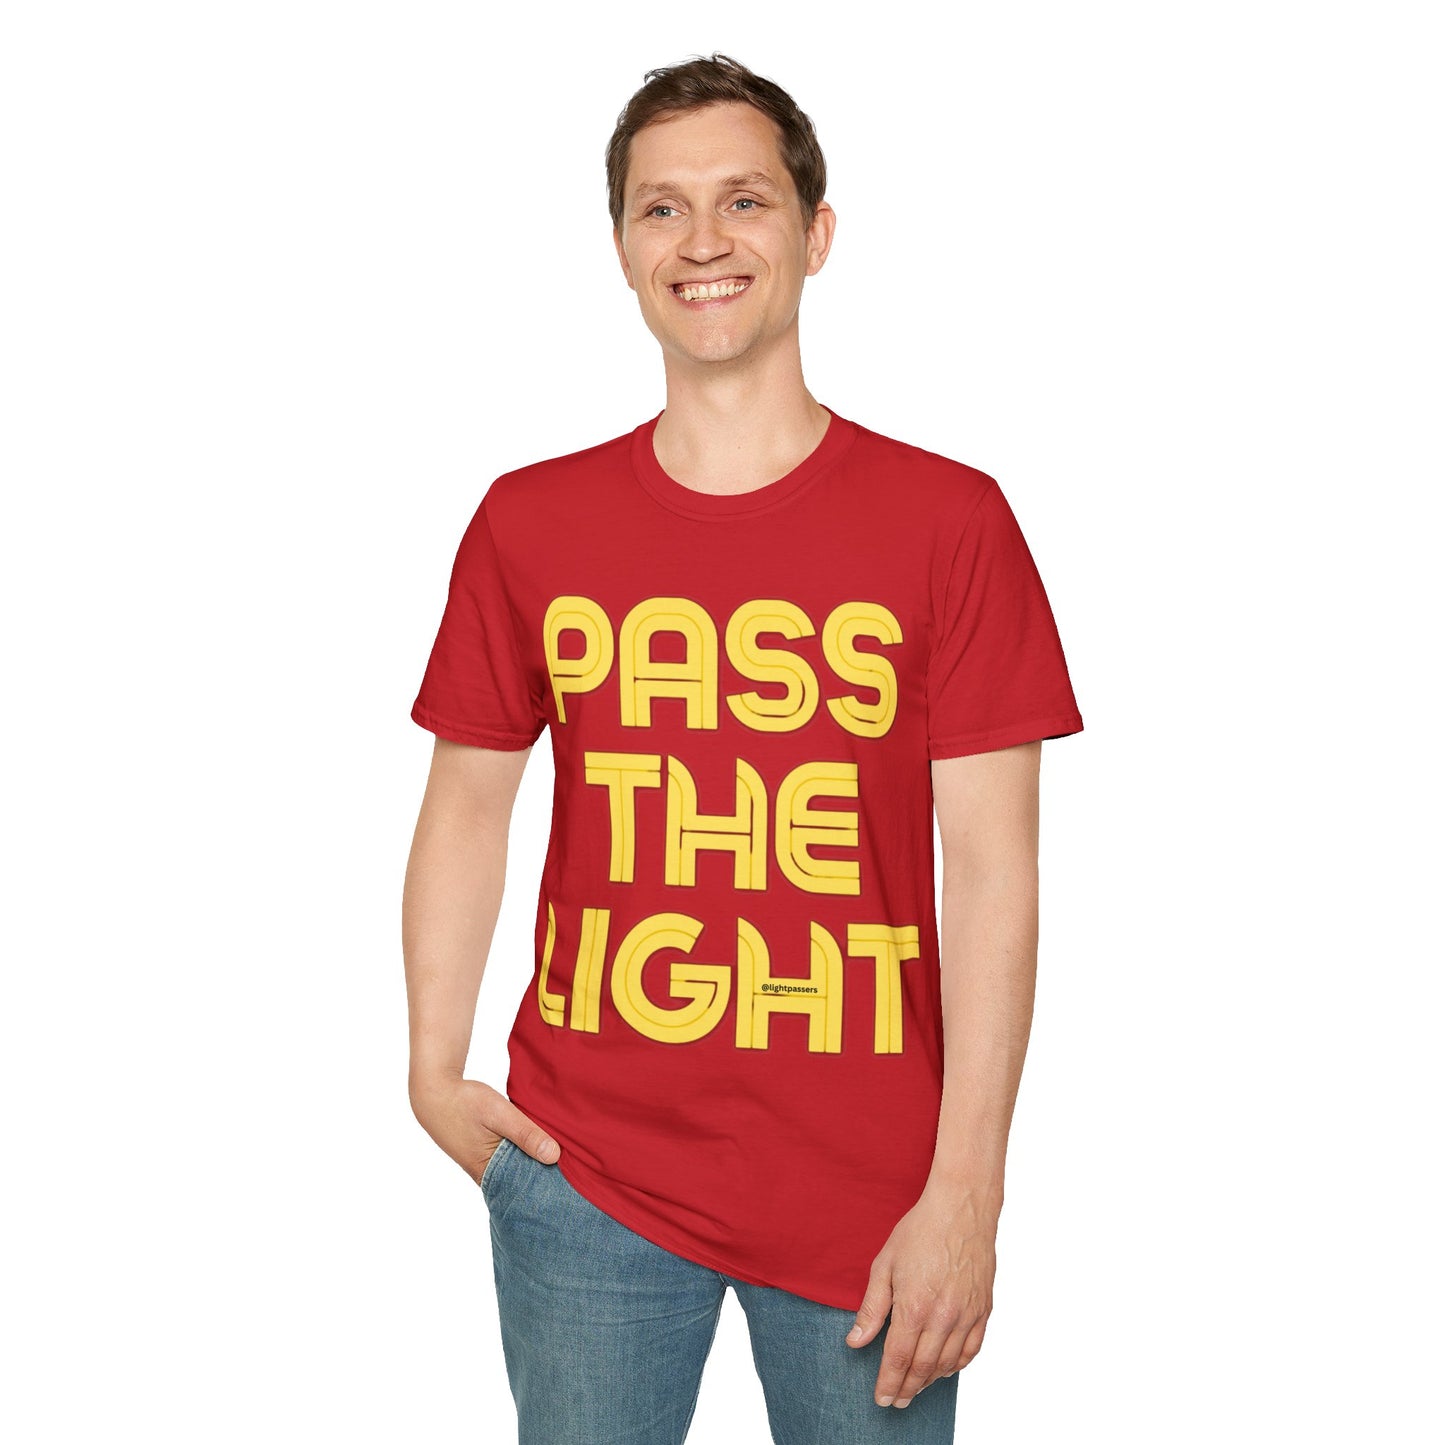 Light Passers Marketplace "PASS THE LIGHT" Unisex Soft Cotton T-shirt Simple Messages